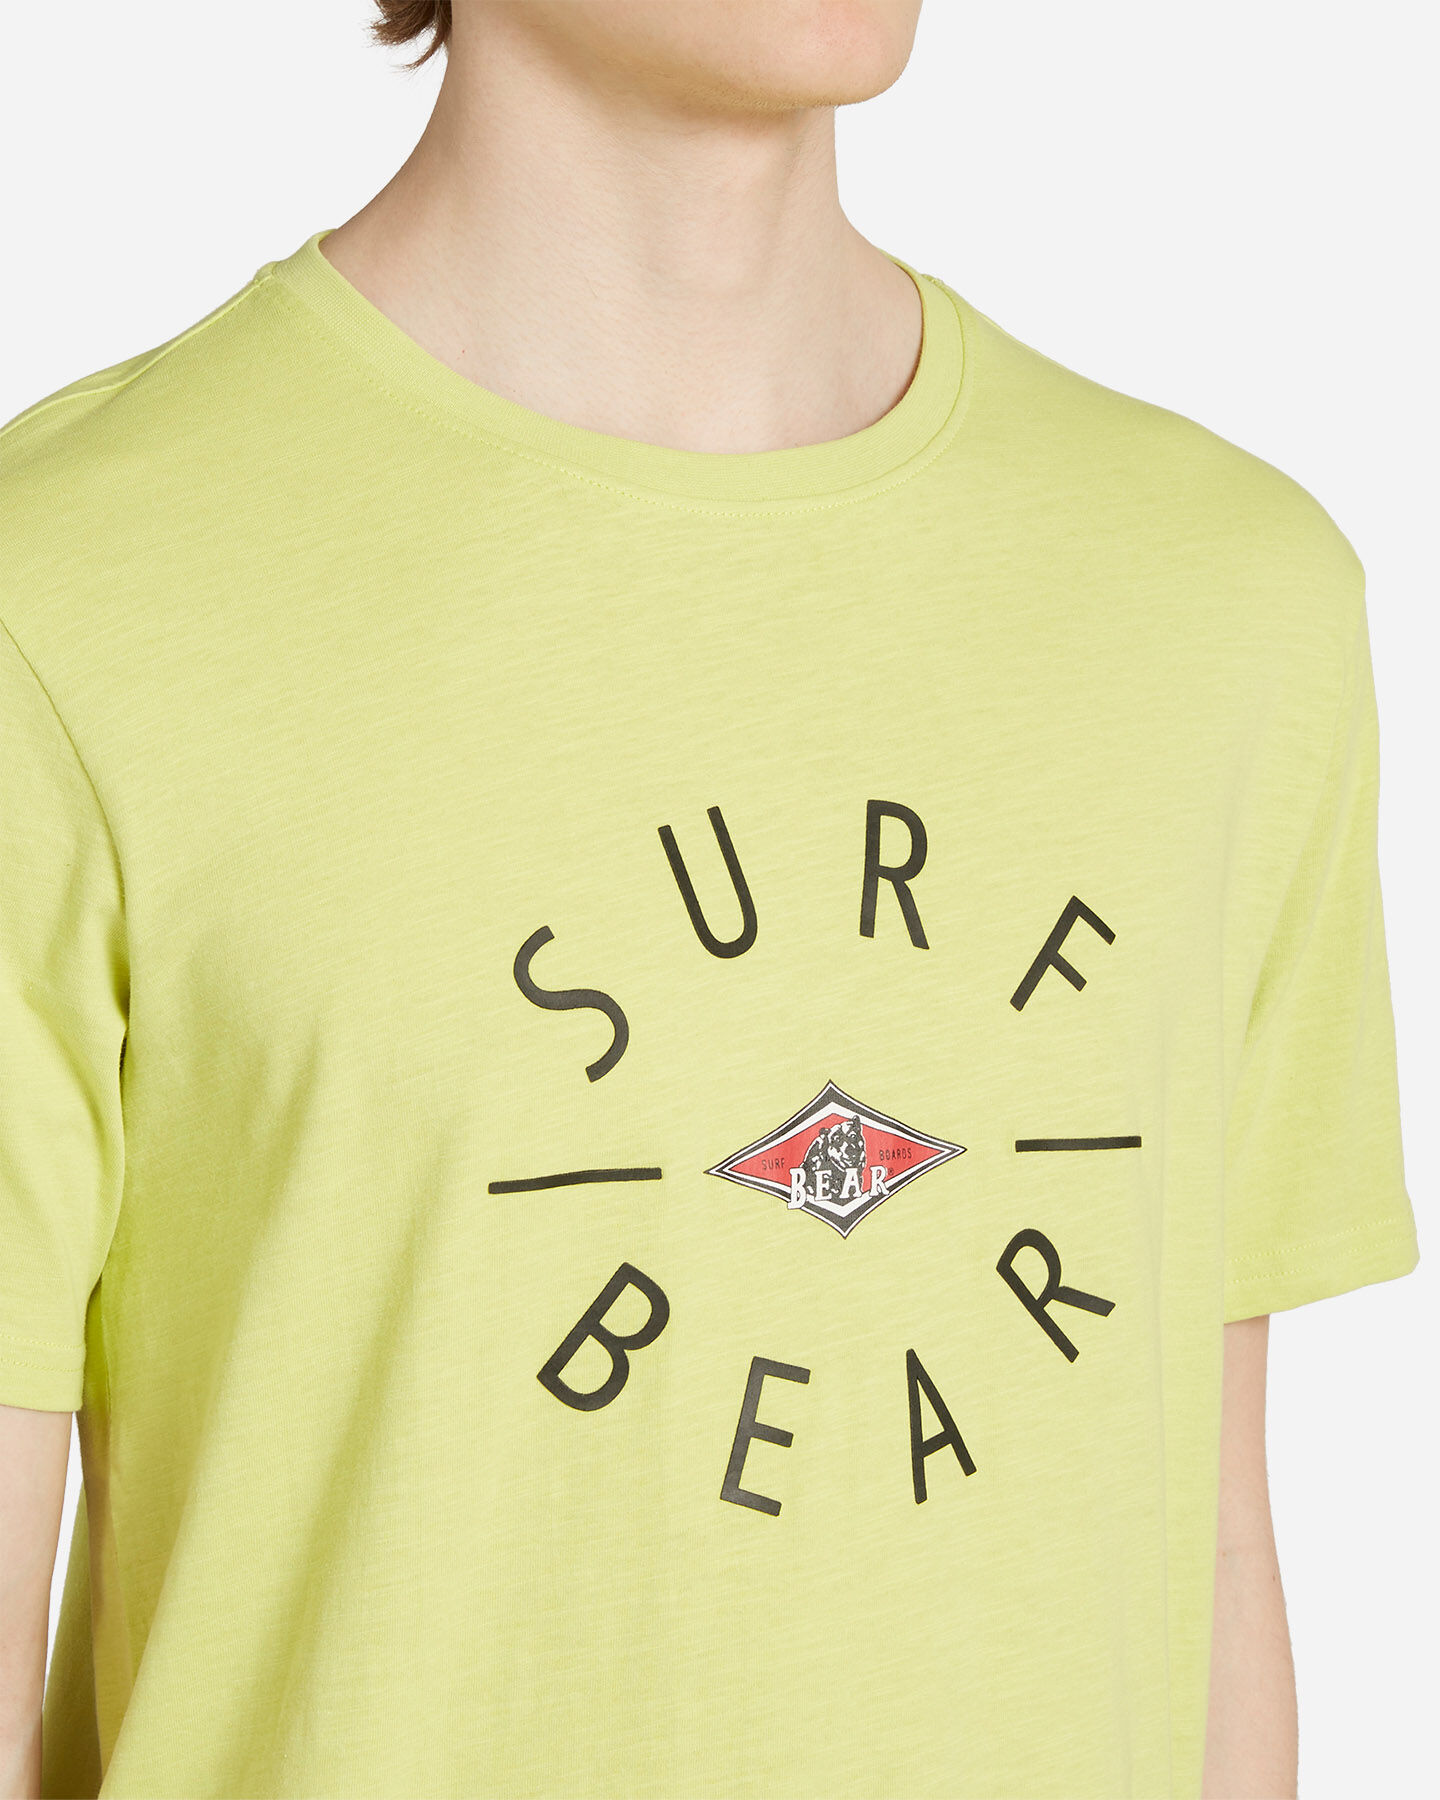  T-Shirt BEAR SURFER CONCEPT M S4122051|692|L scatto 4